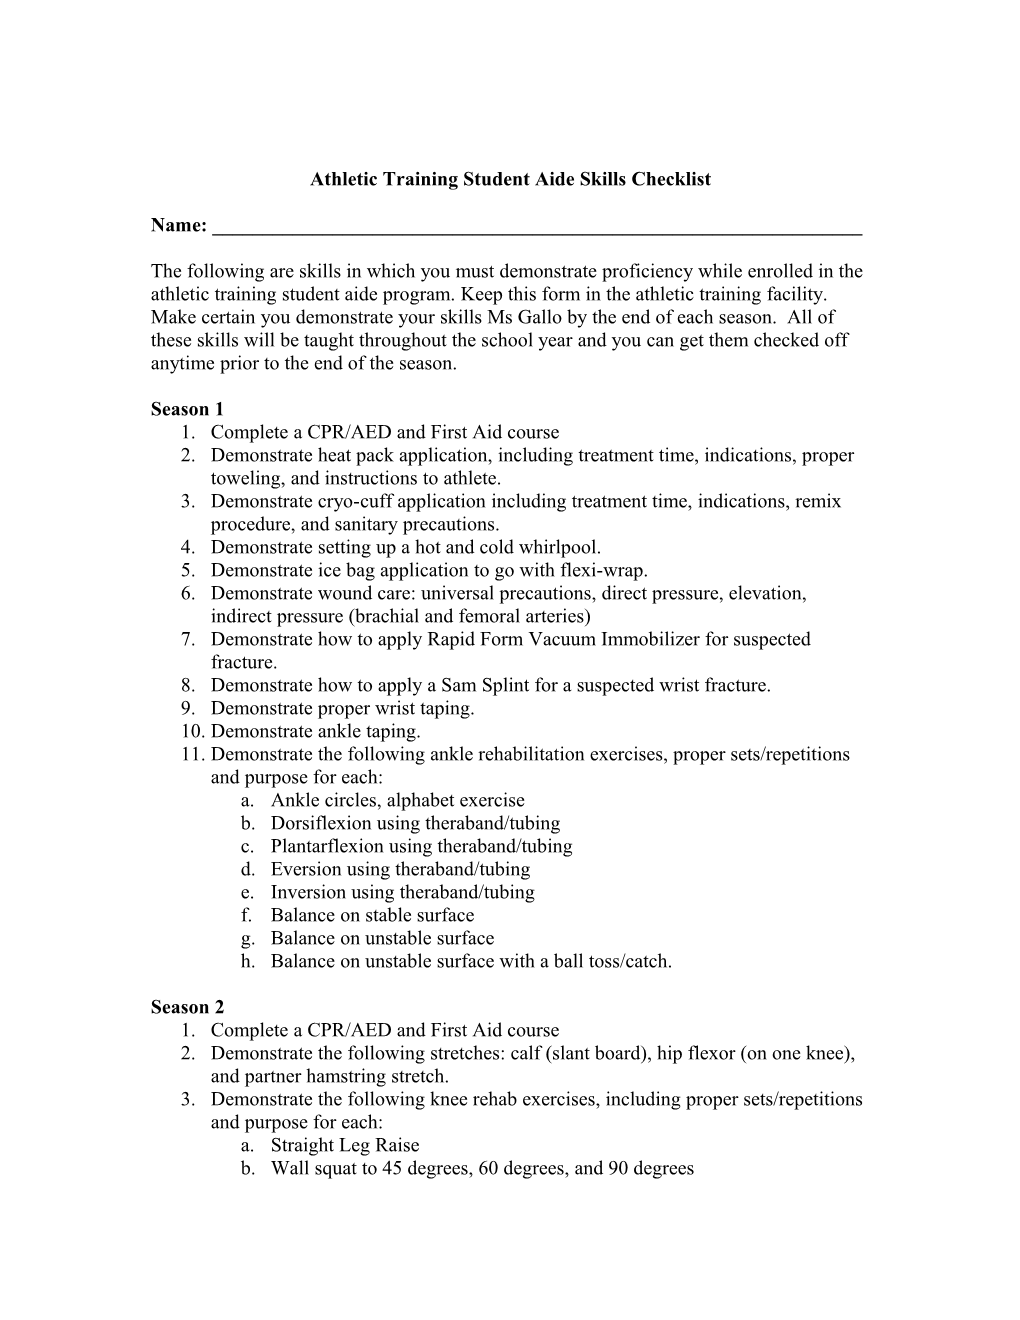 Athletic Training Student Aide Skills Checklist